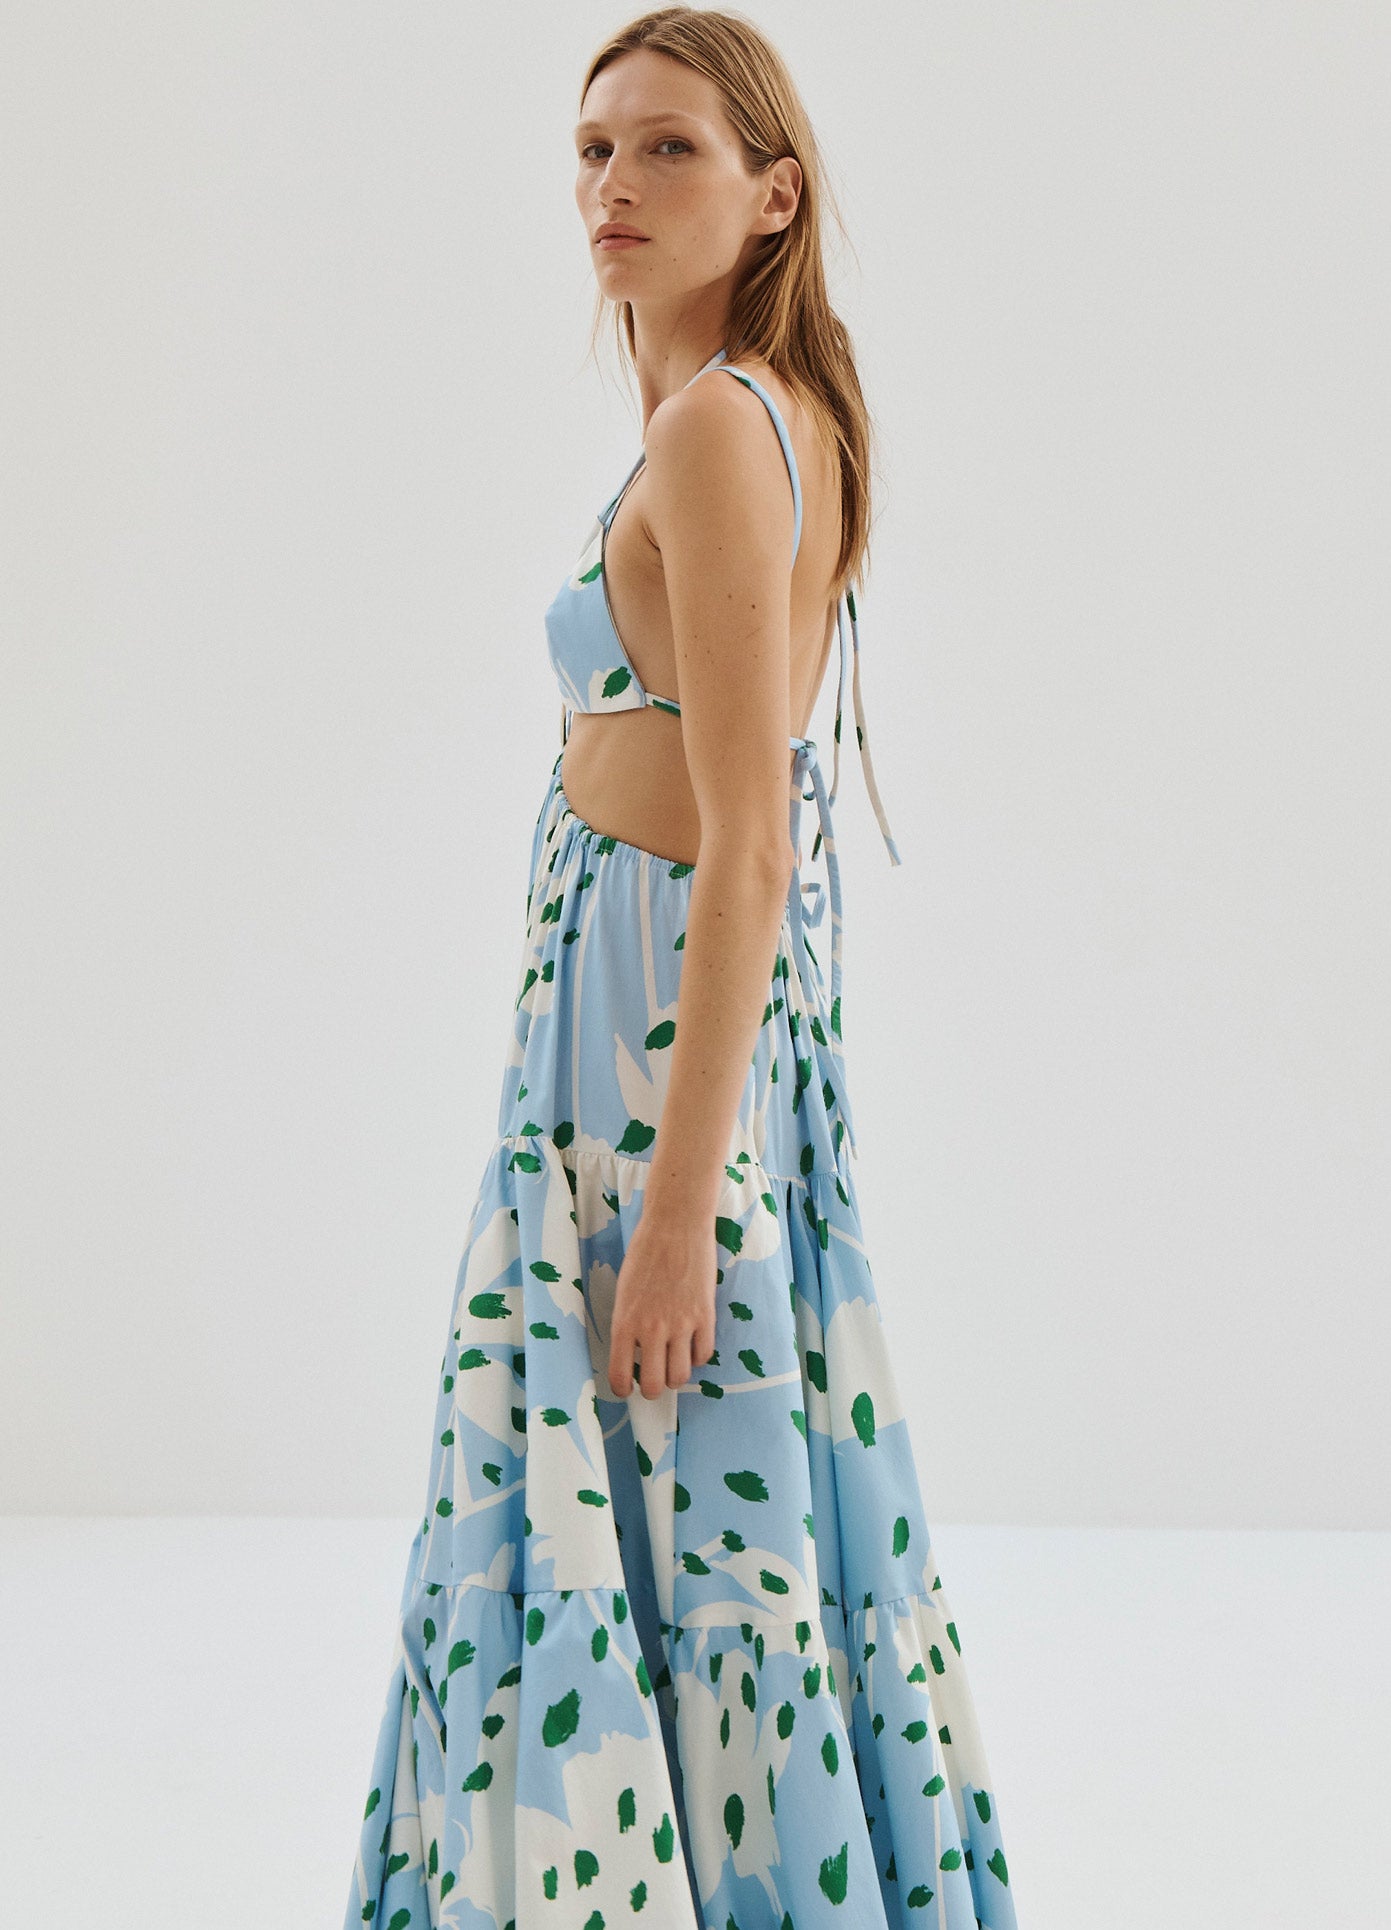 MONSE Floral Print Bra Detail Maxi Dress in Light Blue Multi on Model Side View